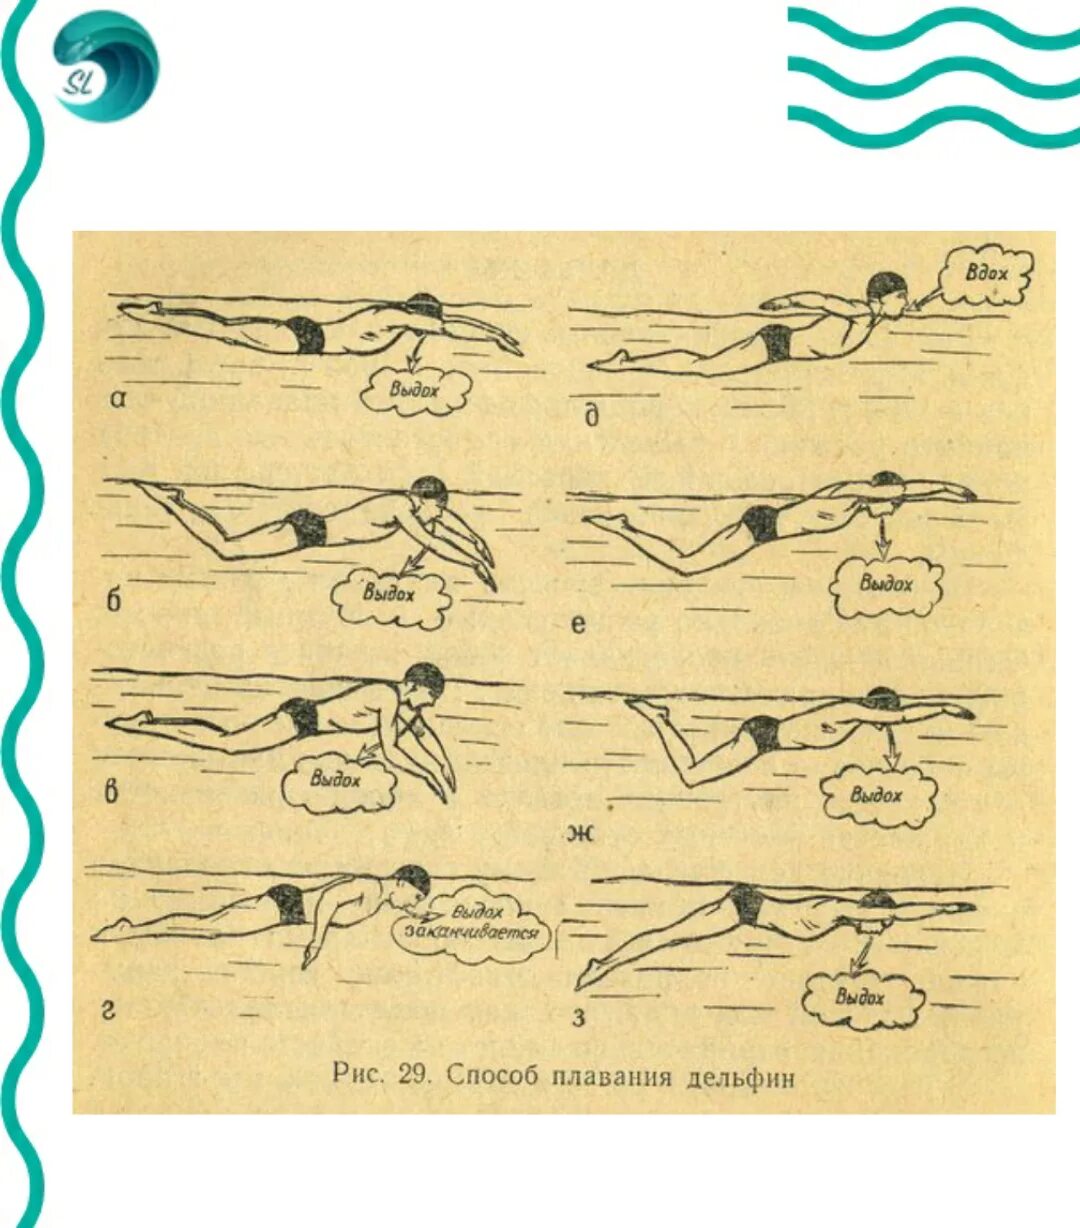 Техники плавания Баттерфляй. Стиль плавания Баттерфляй техника. Техника плавания: стиль Баттерфляй (Дельфин). Техники плавания брасс Кроль Баттерфляй. Как научиться плавать под